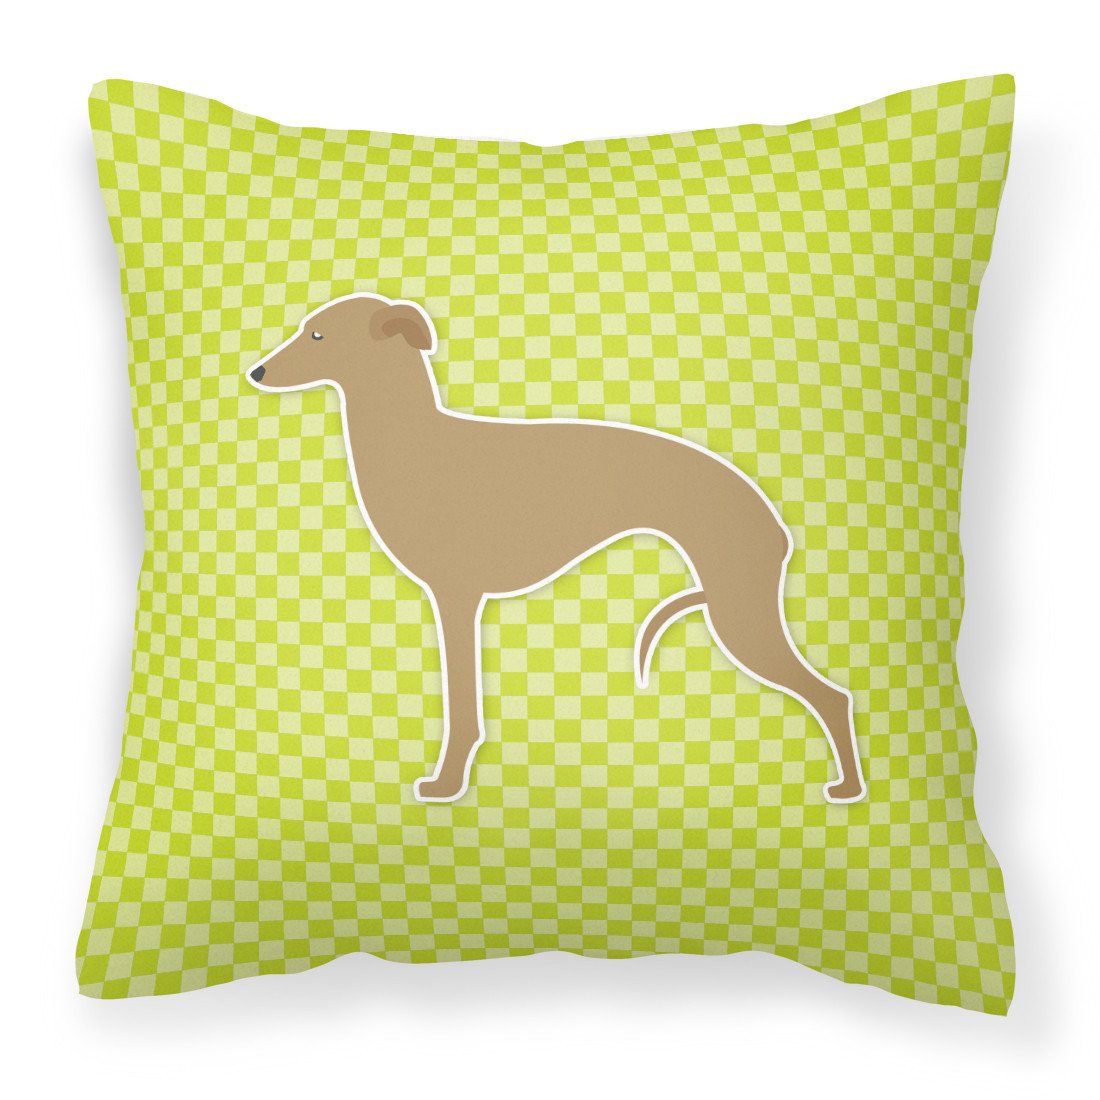 Italian Greyhound Checkerboard Green Fabric Decorative Pillow BB3814PW1818 by Caroline's Treasures